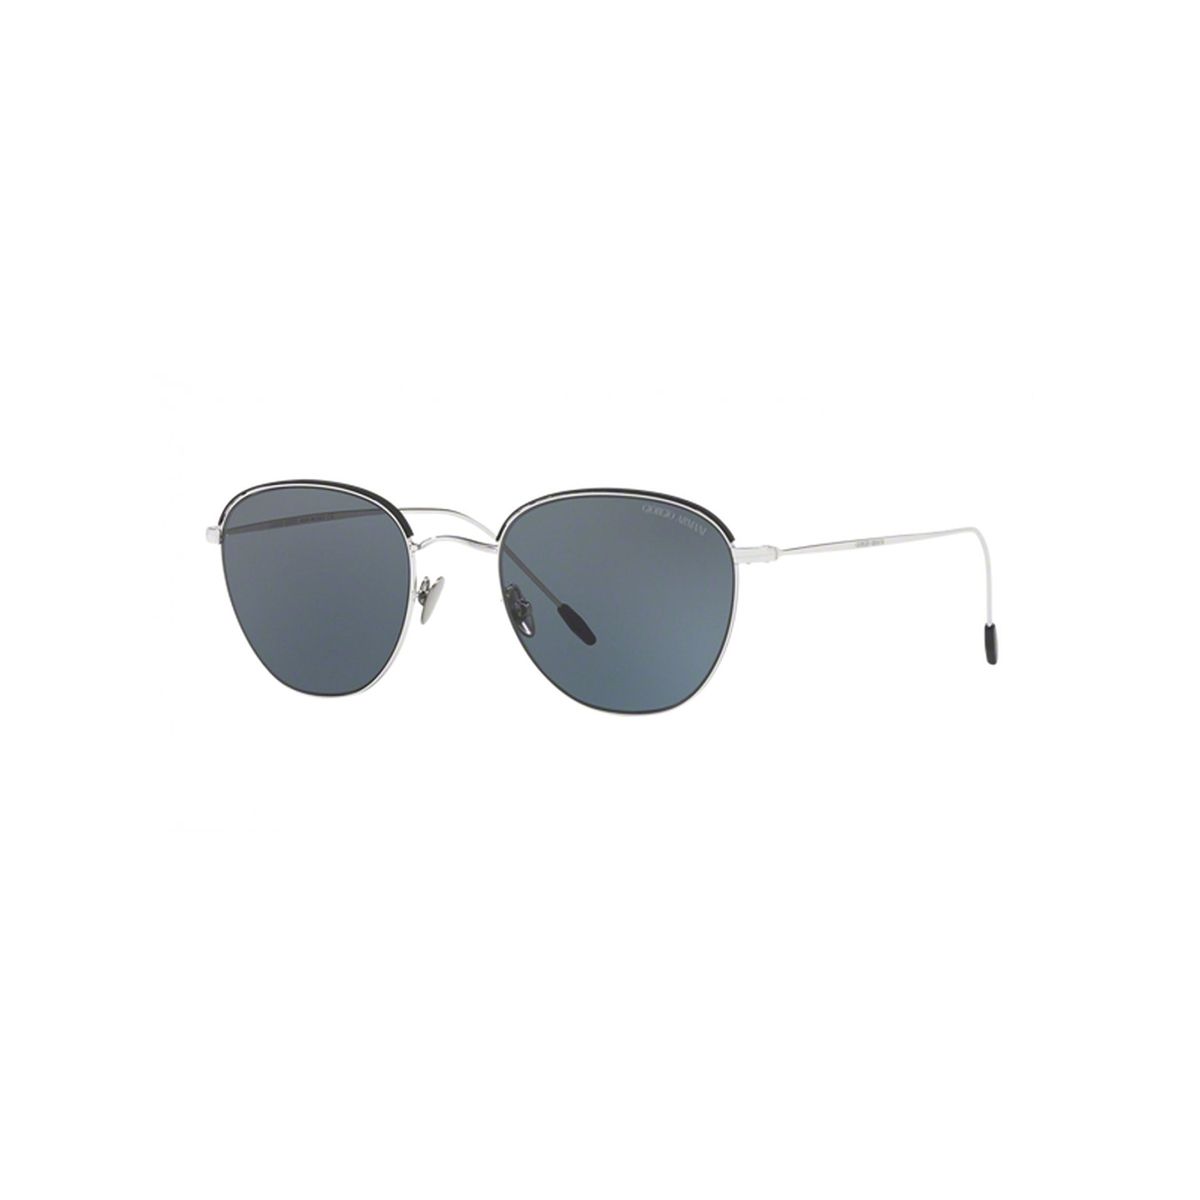 AR6048 Round Sunglasses 3015 87 - size 51